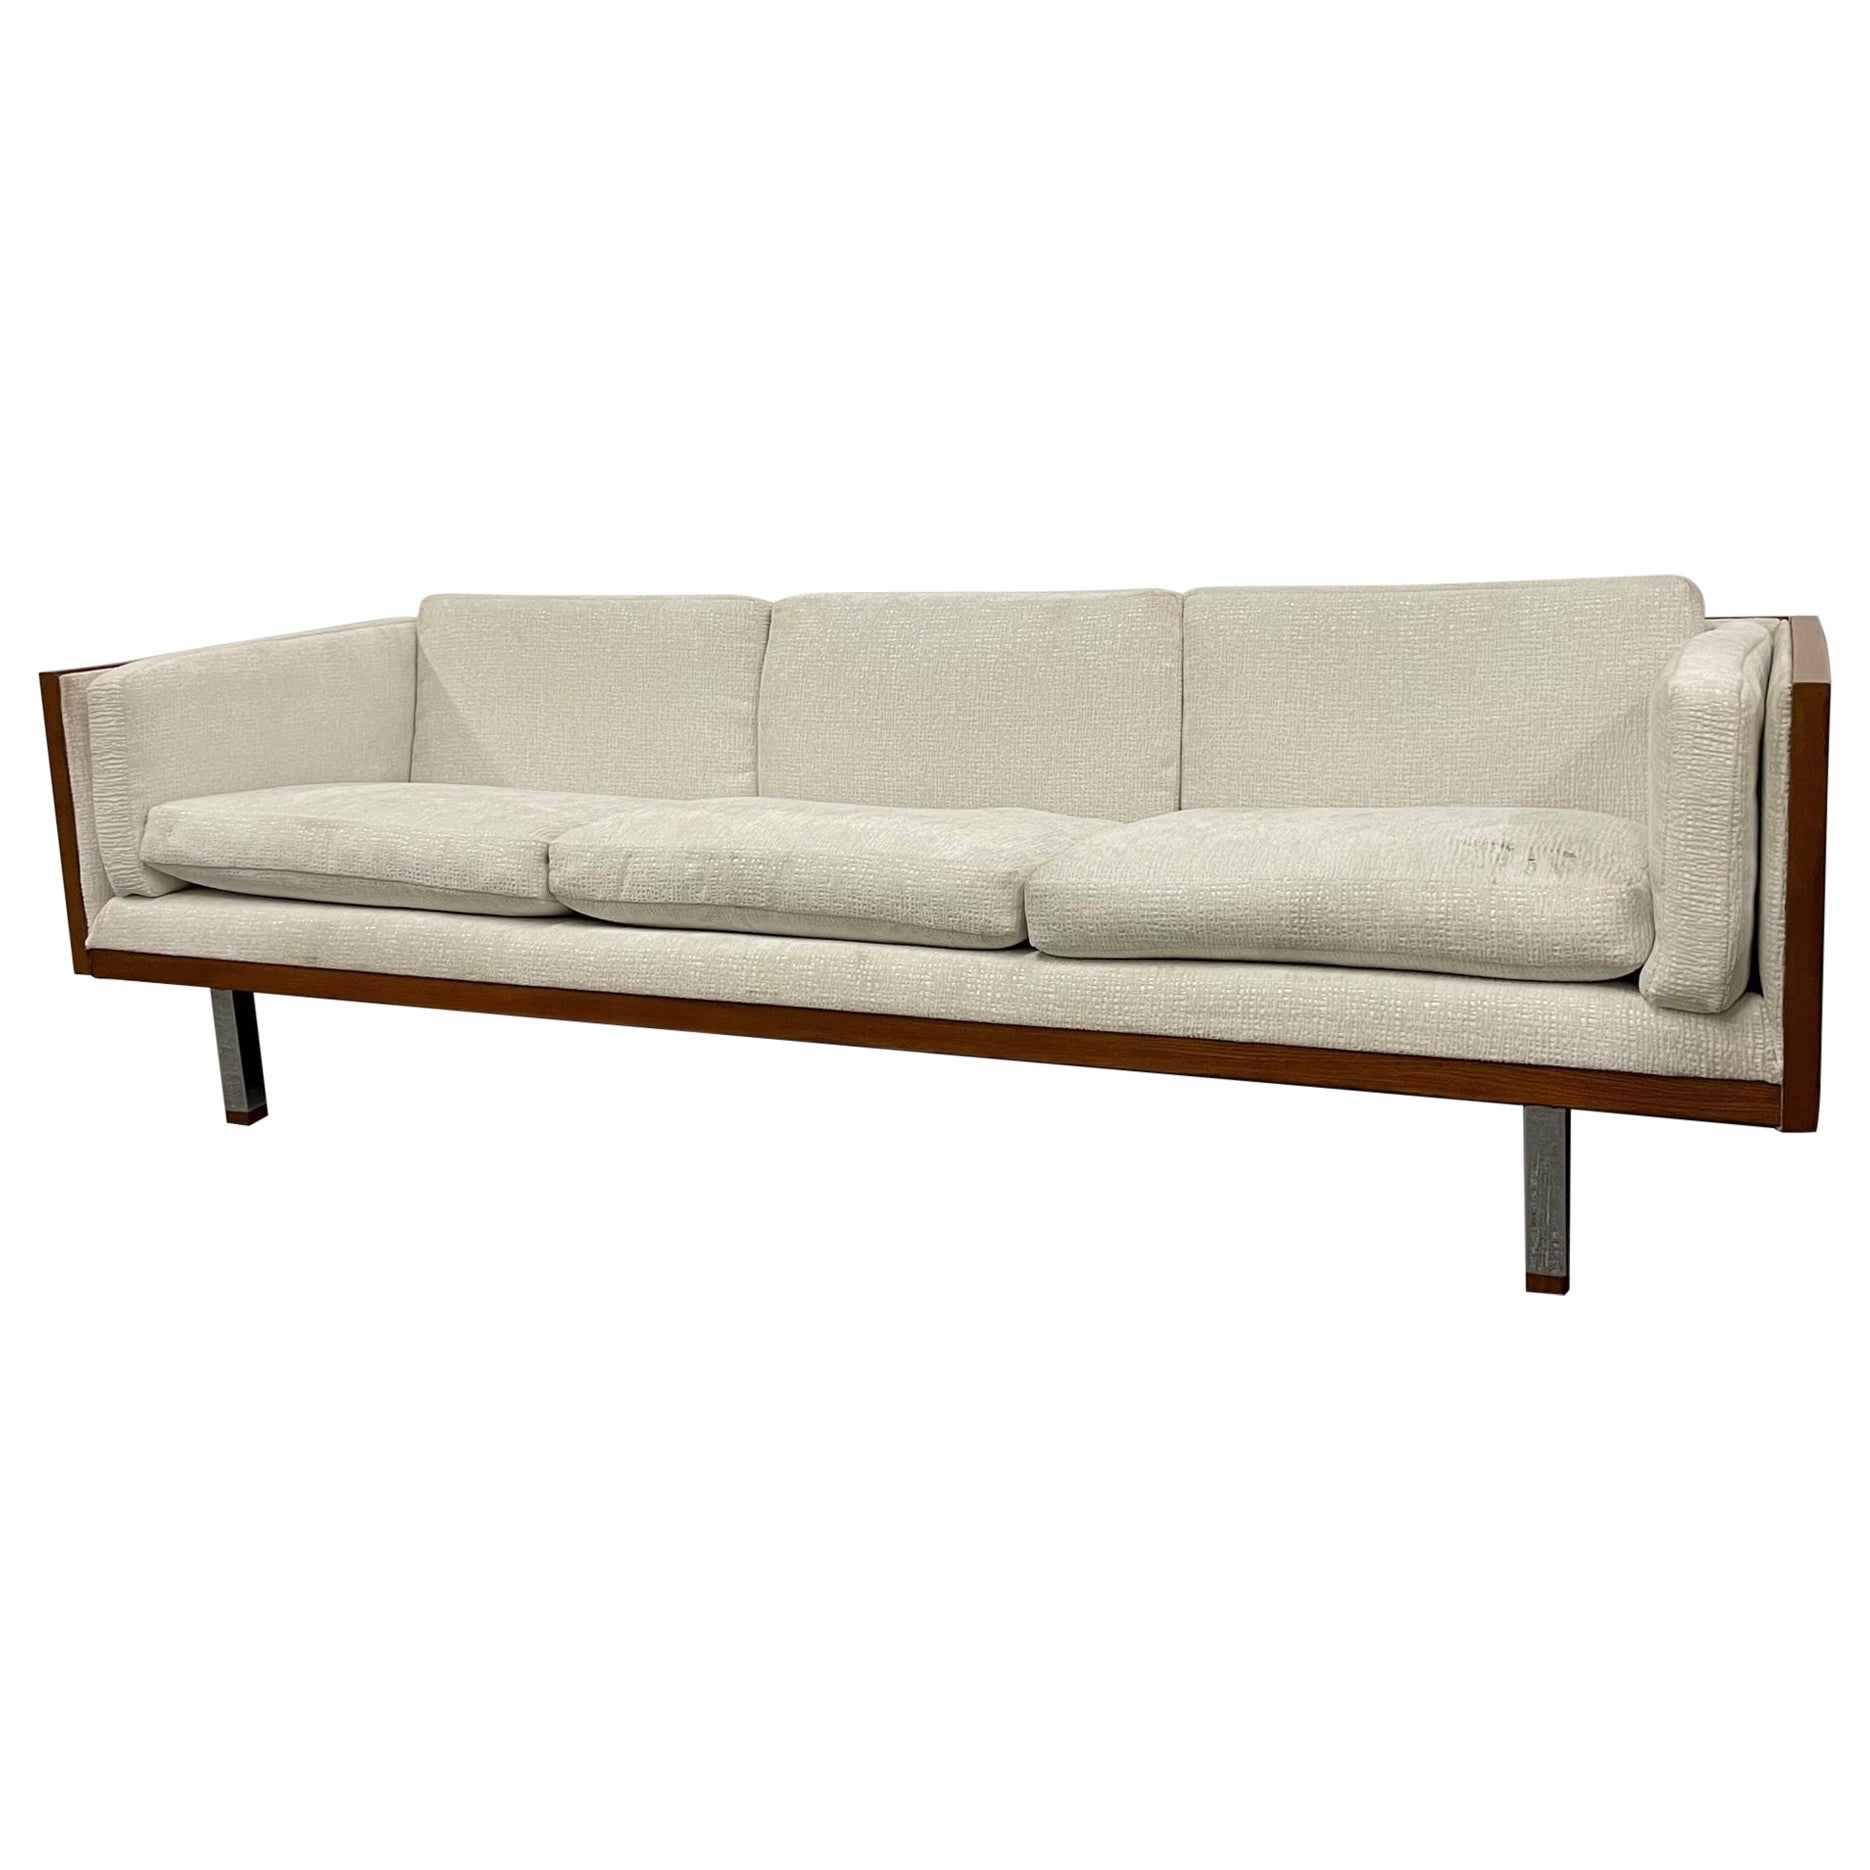 Mid-Century Modern Milo Baughman Style Sofa, Couch, Walnut, Chrome, American